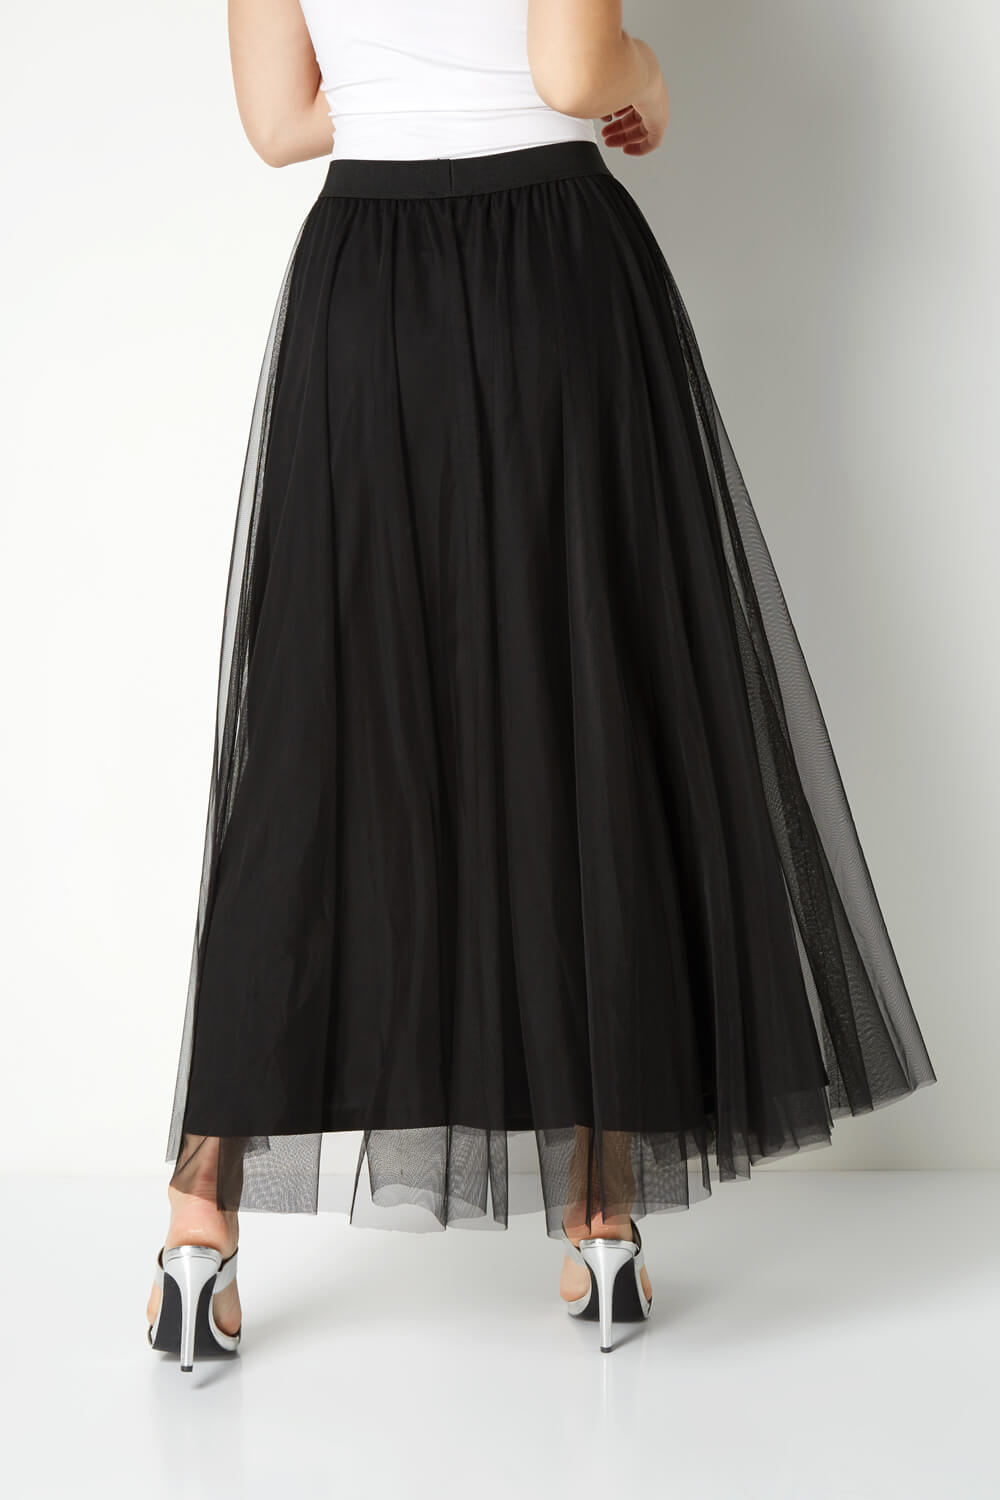 black skirt maxi